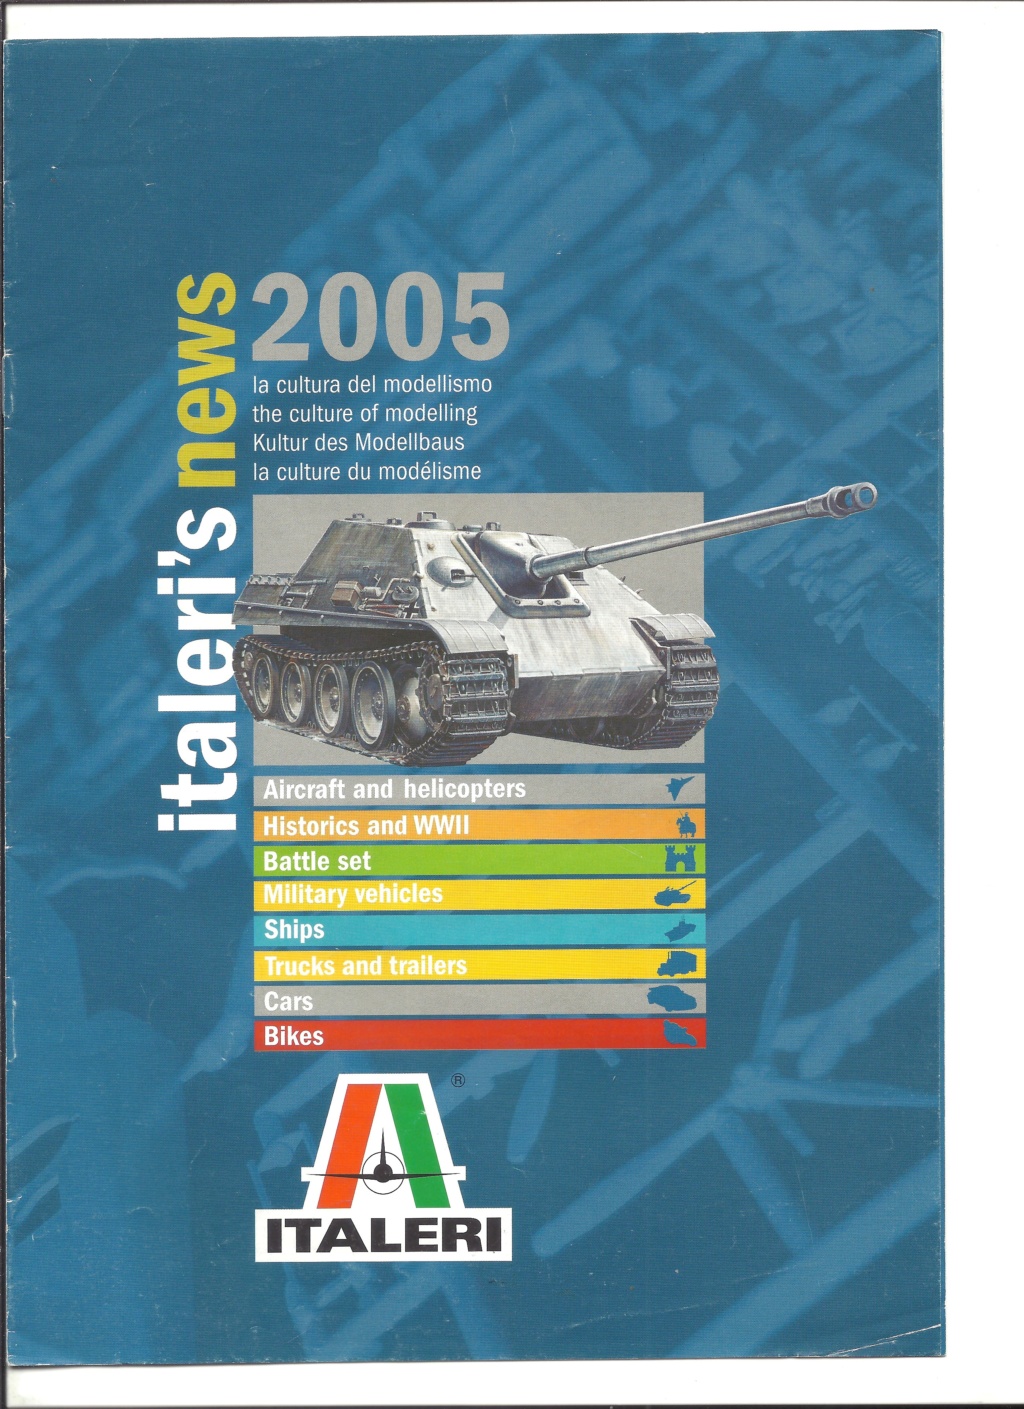 [ITALERI 2005] Catalogue nouveautés 2005 Itale928